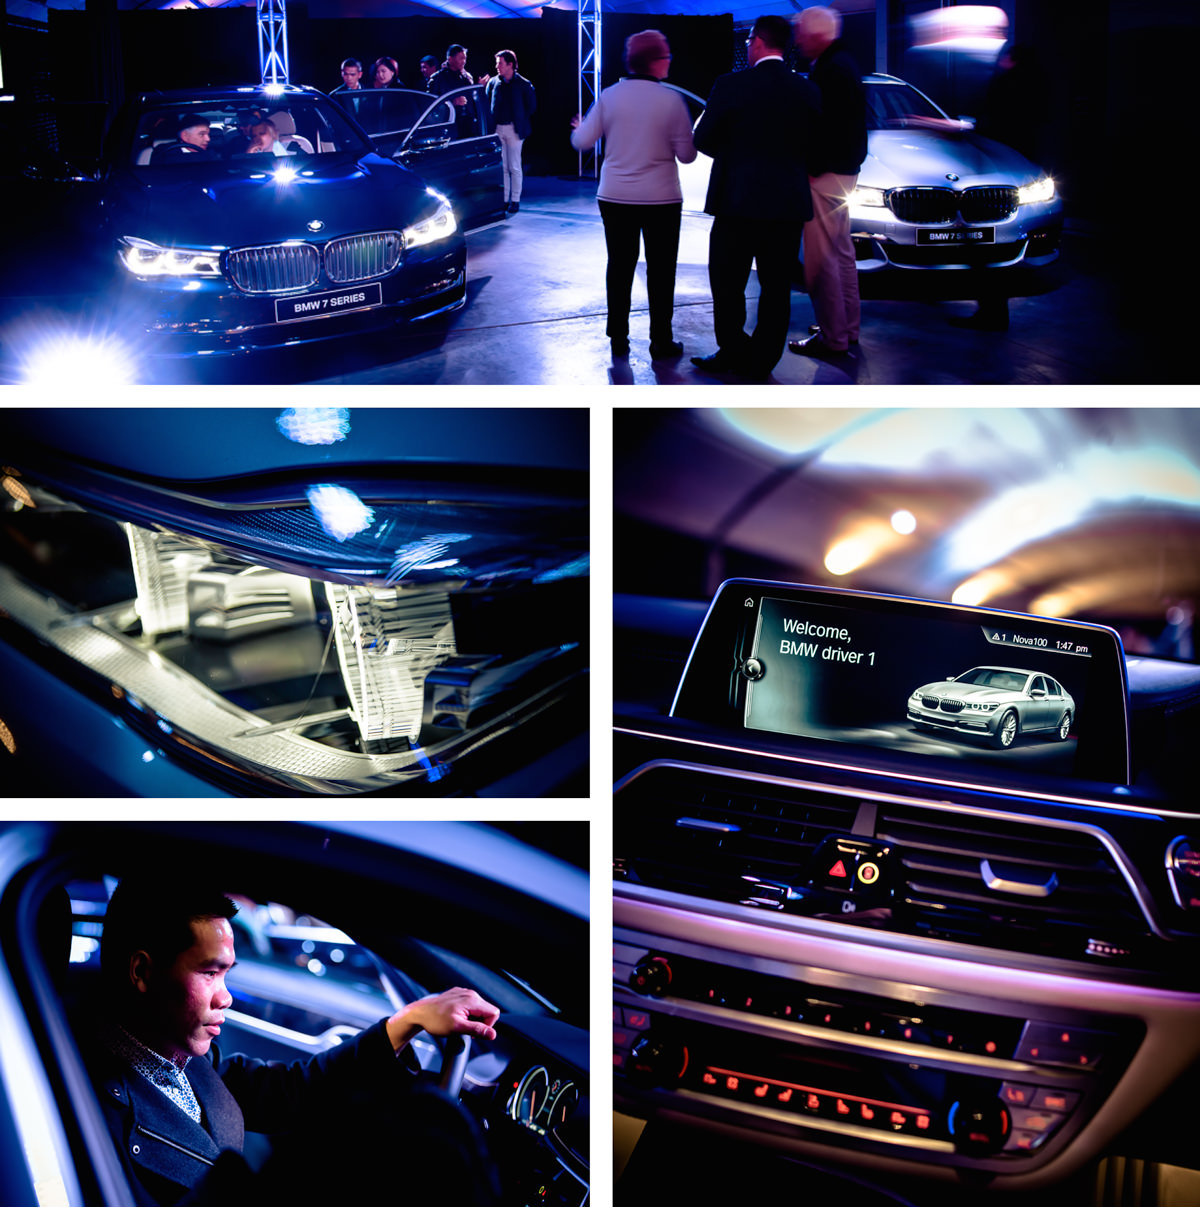 luxury car details - BMW 7 series in Australia